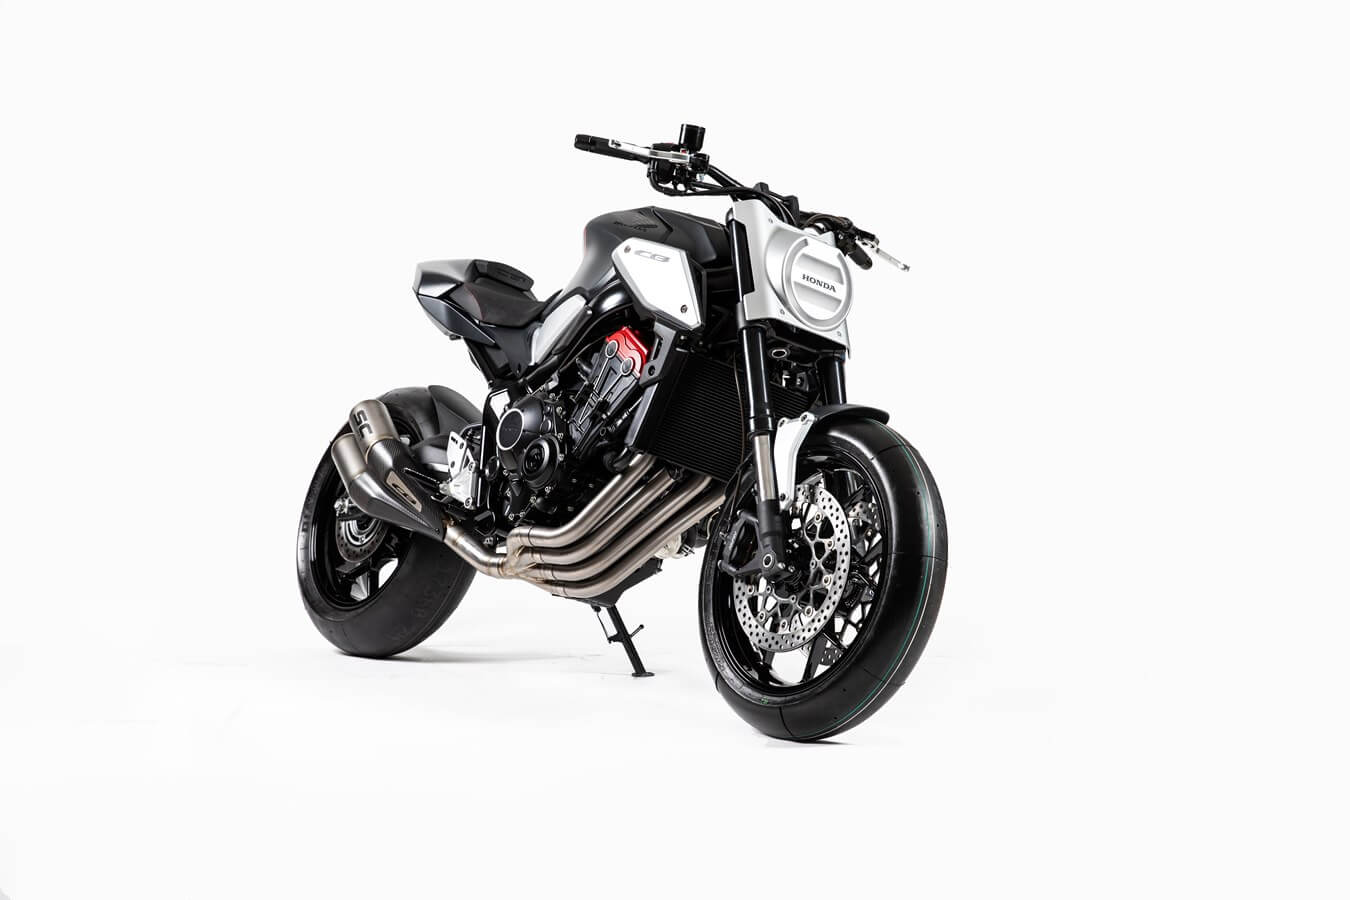 2019 Honda CB650R Neo Sports Cafe Concept Motorcycle | New Naked CBR Sport Bike (CB125R / CB300R / CB1000R)